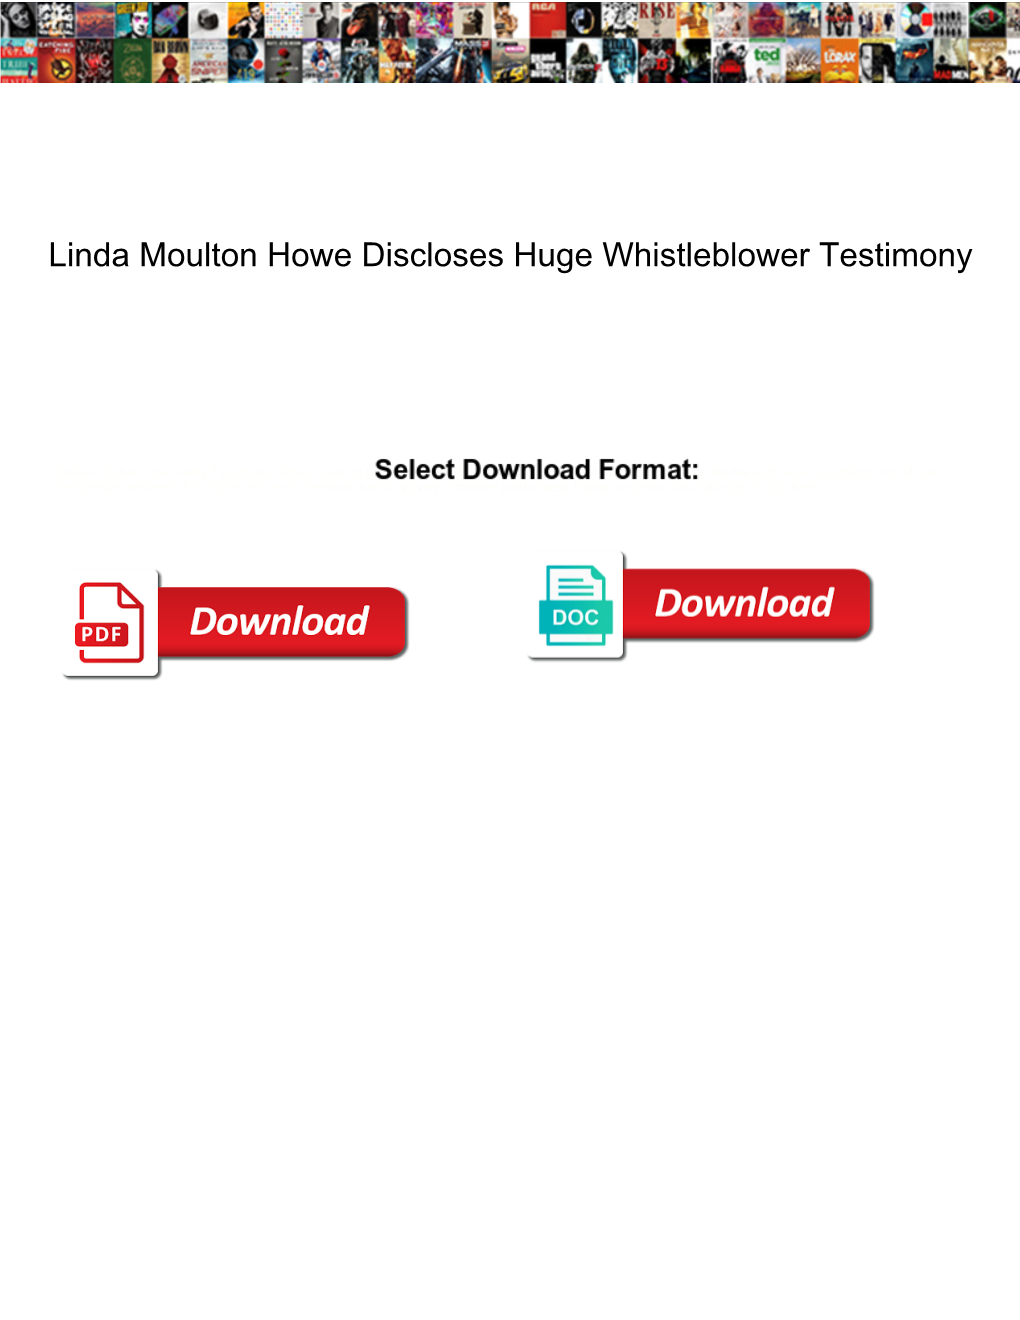 Linda Moulton Howe Discloses Huge Whistleblower Testimony Craft